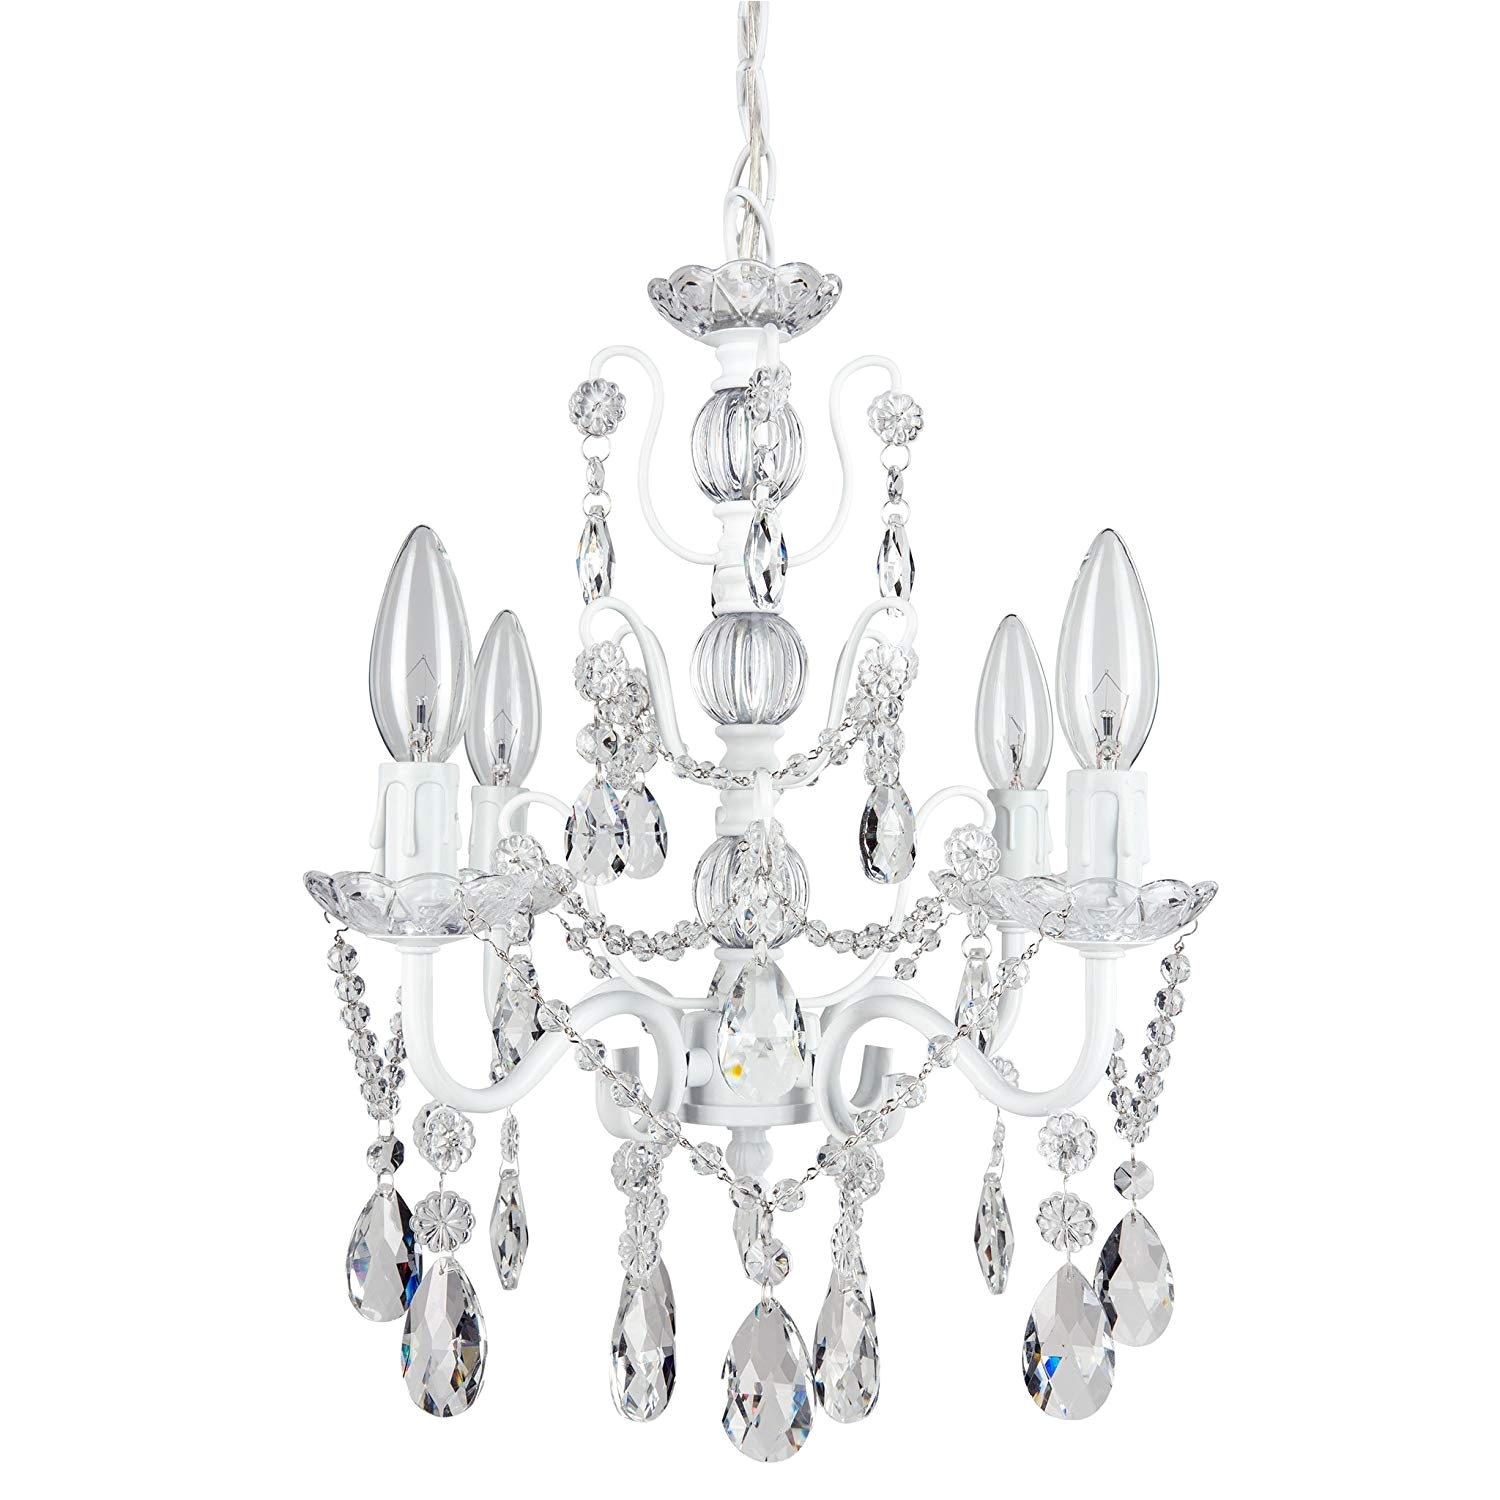 madeleine white crystal chandelier mini swag plug in glass pendant 4 light wrought iron ceiling lighting fixture lamp amazon com